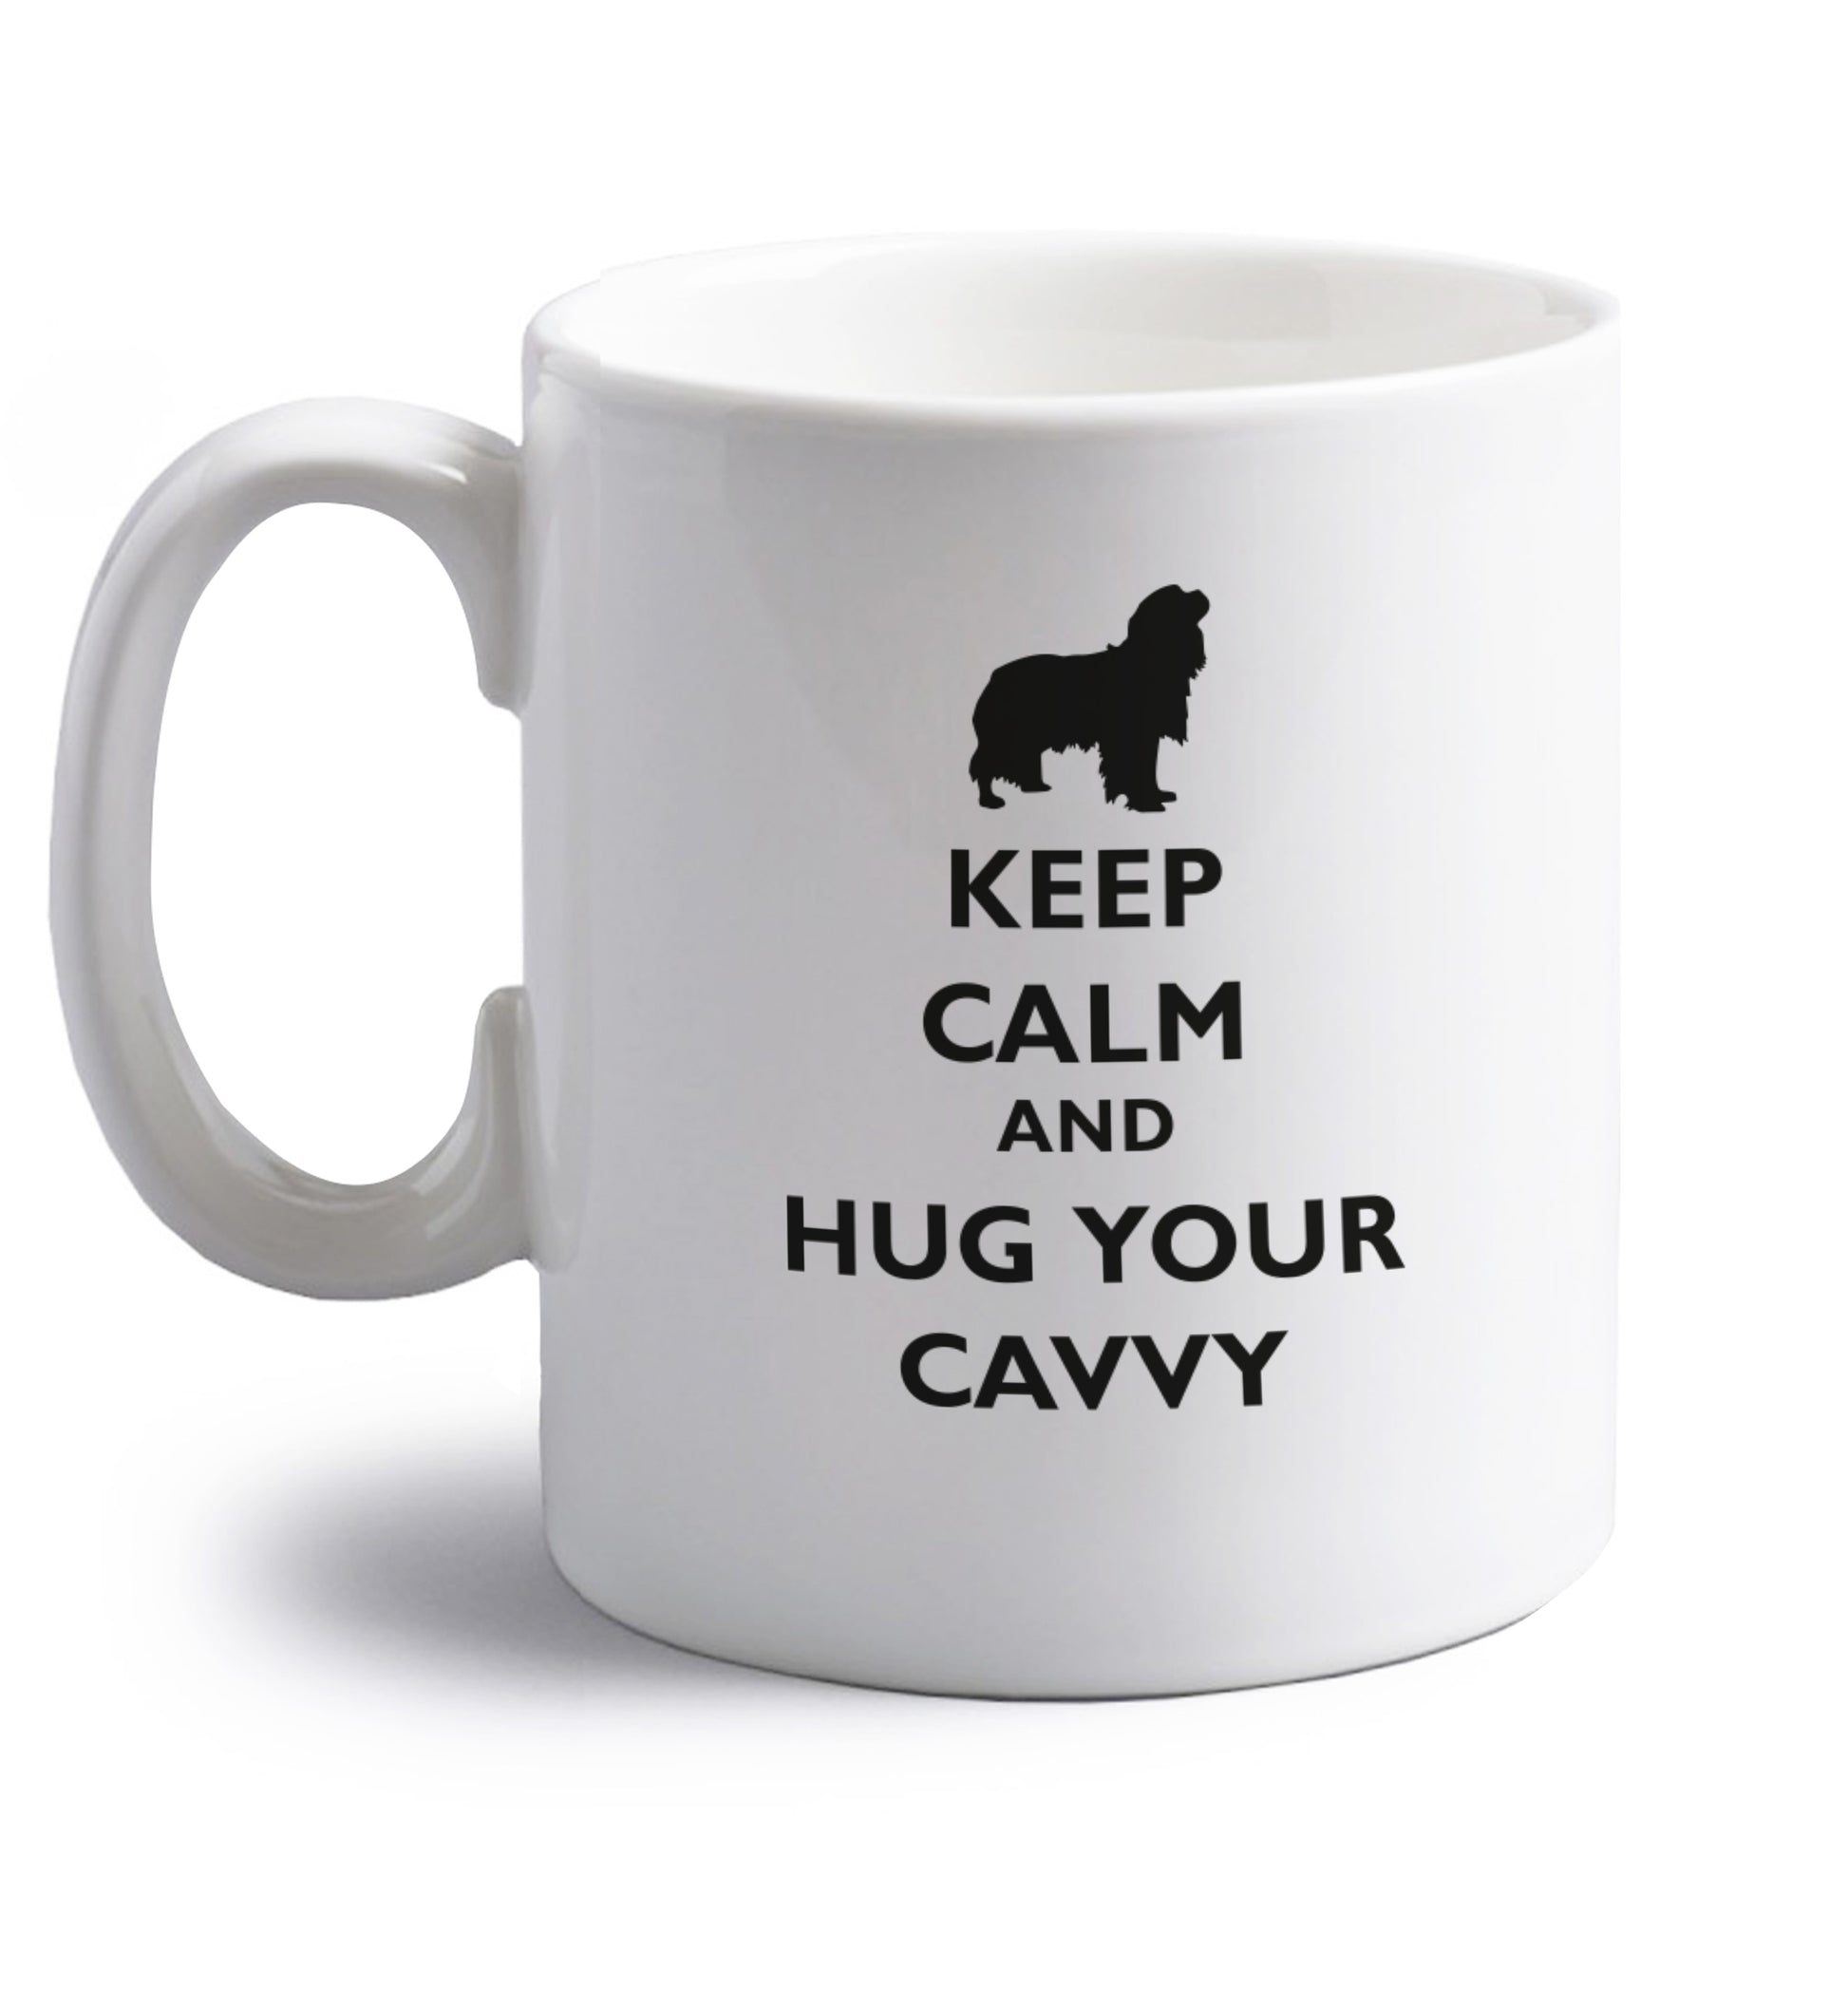 Keep calm and hug your cavvy right handed white ceramic mug 